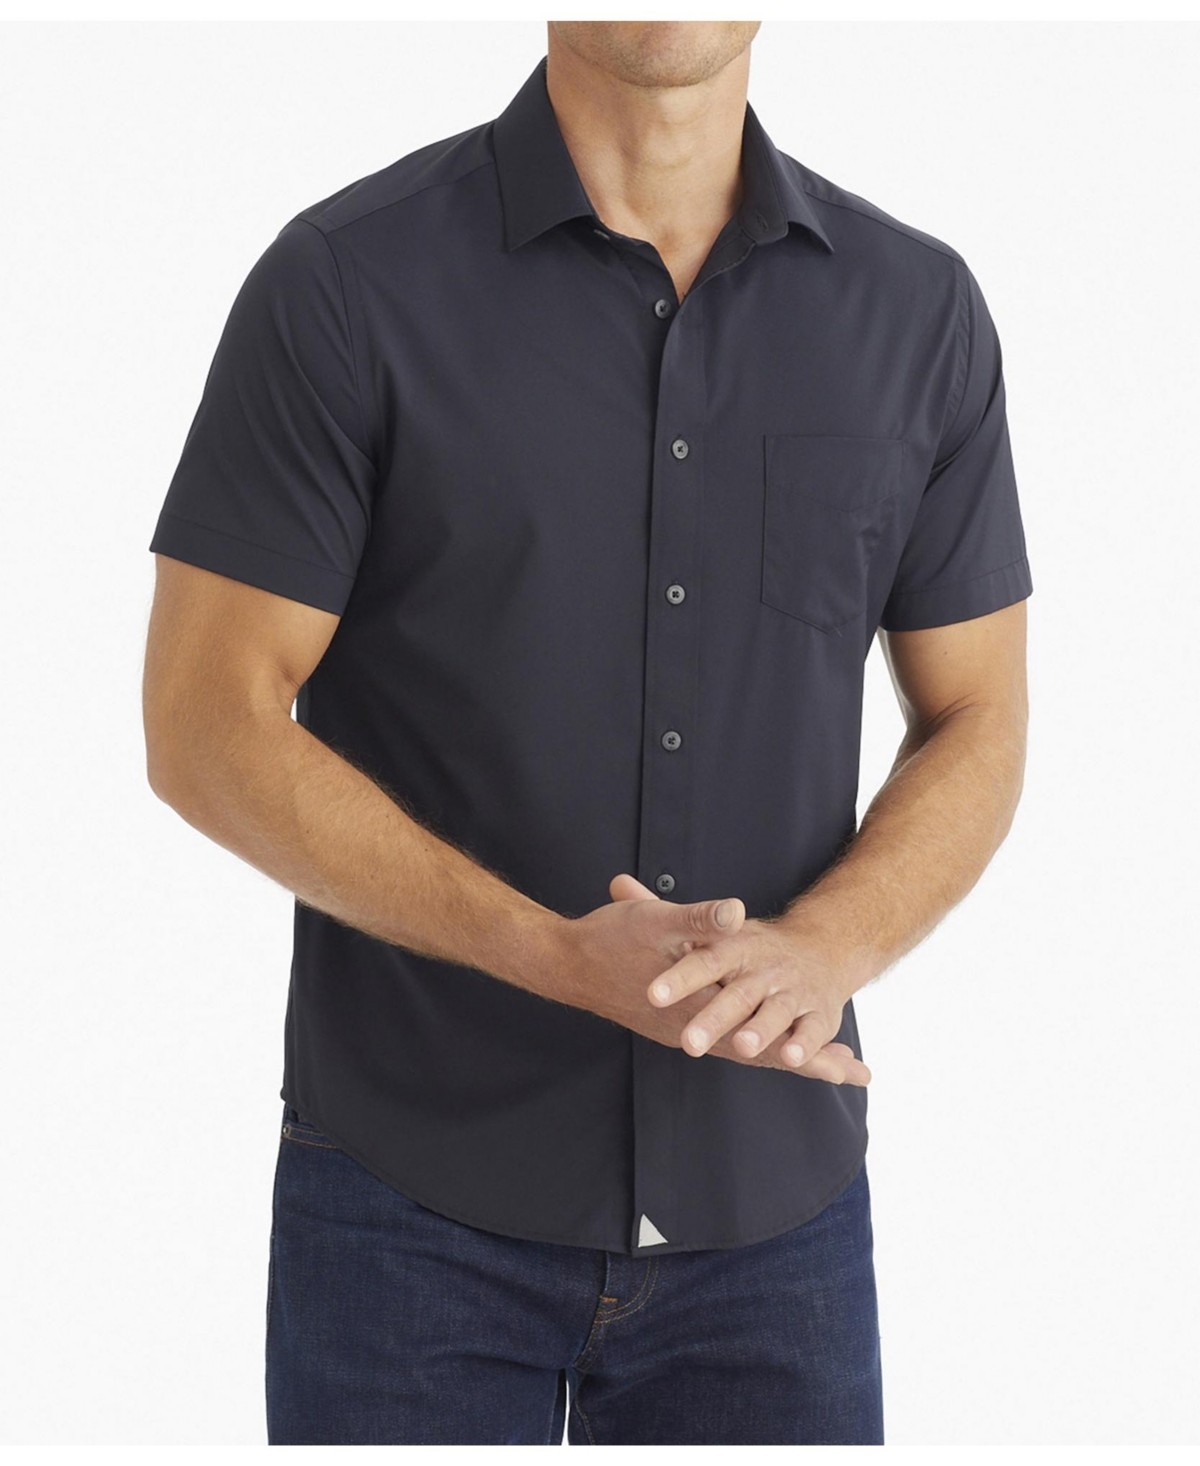 Men's Slim Fit Wrinkle-Free Performance Short Sleeve Gironde Button Up Shirt - Navy